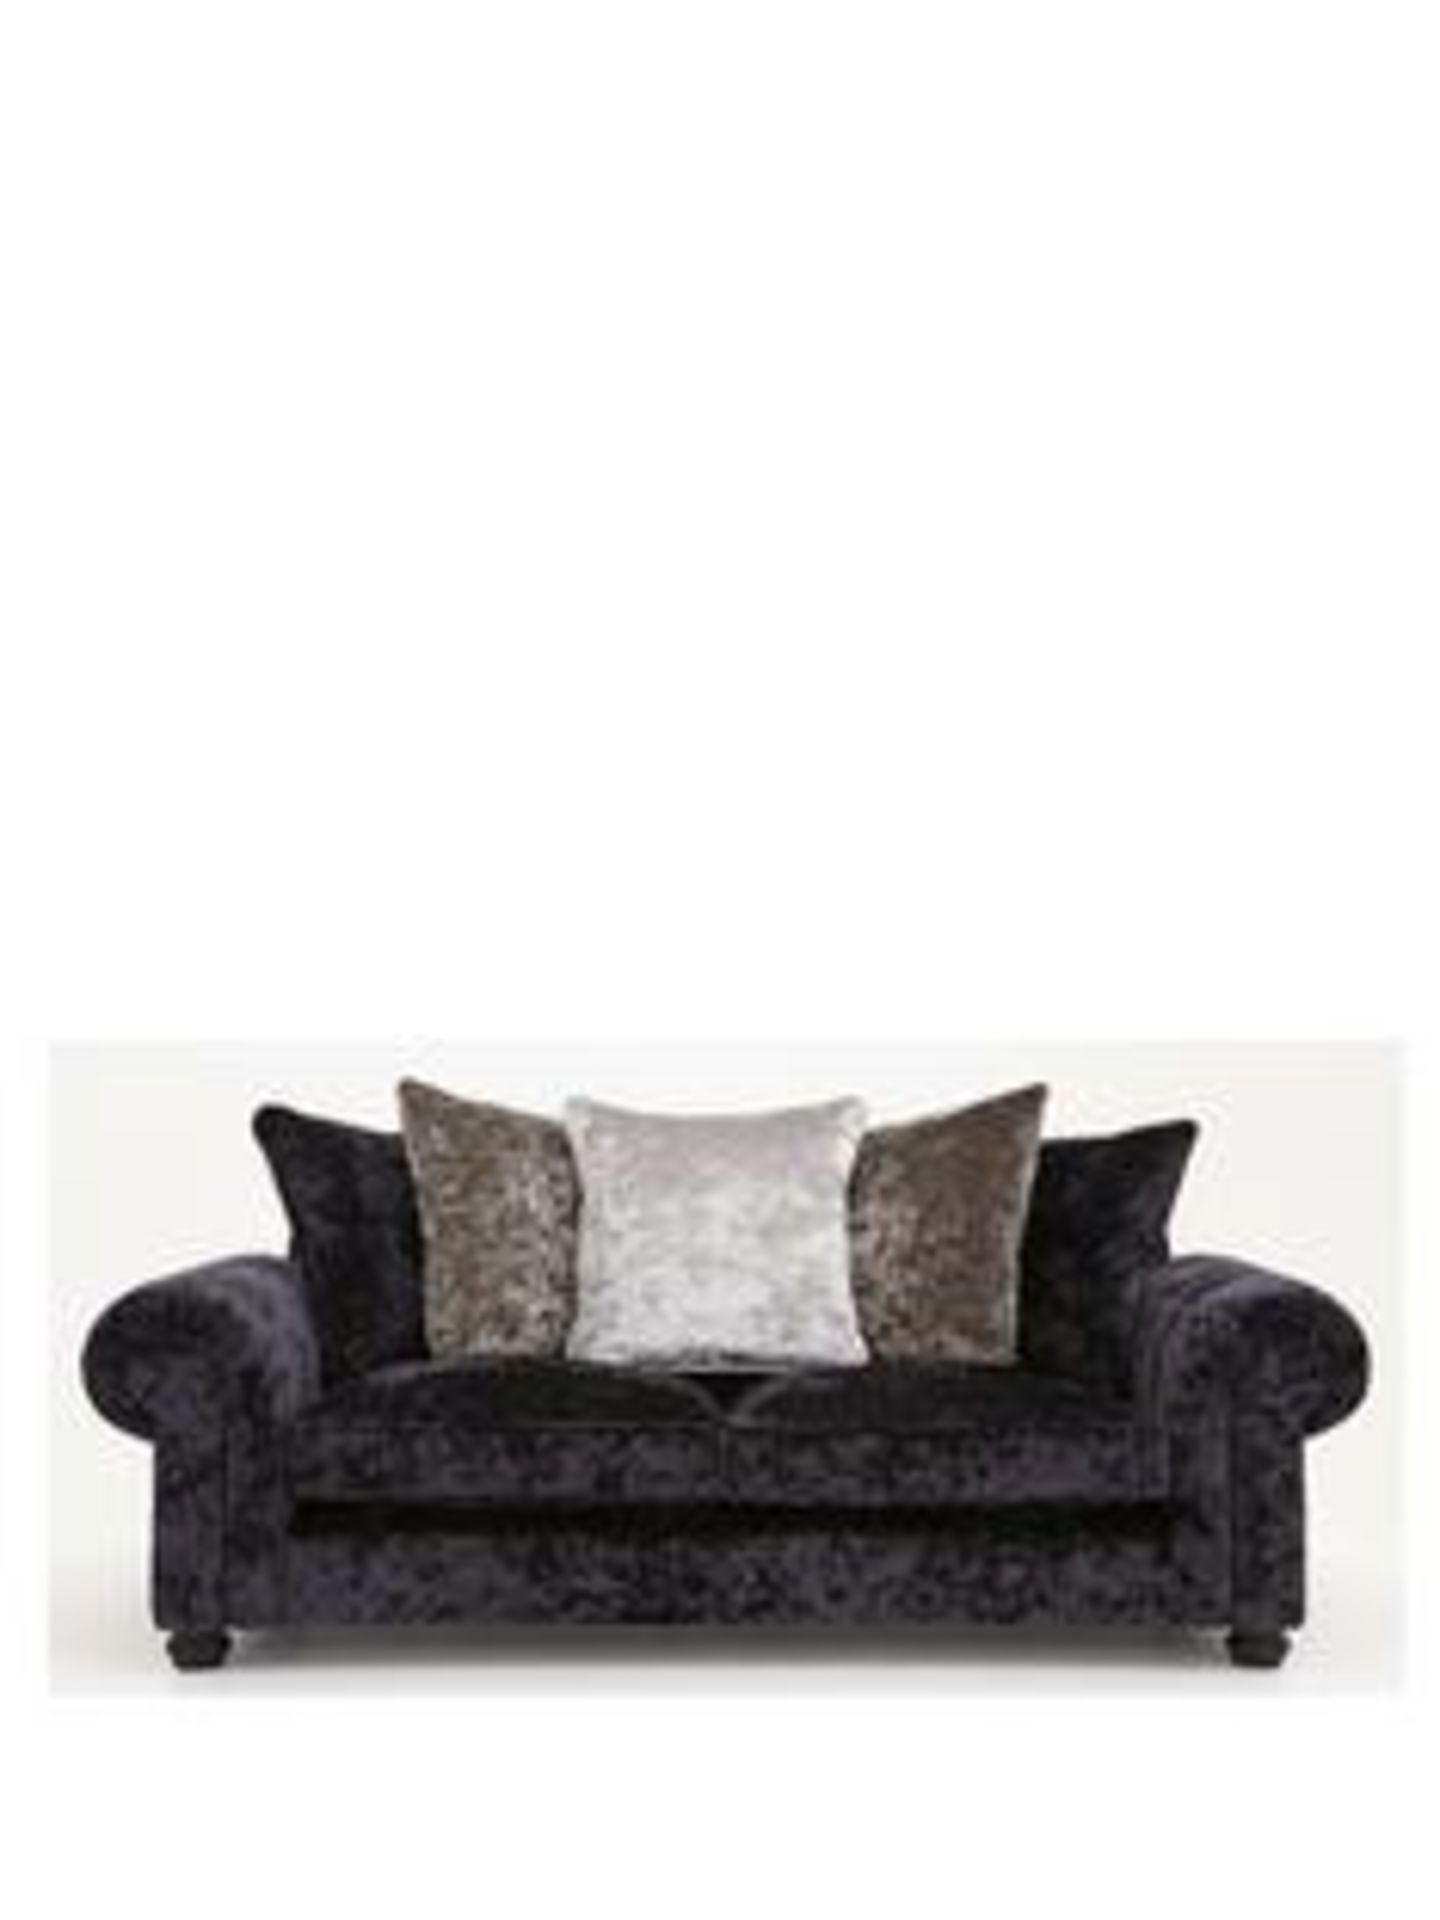 Scarpa deluxe 3 seater sofa in black shimmer crushed velvet